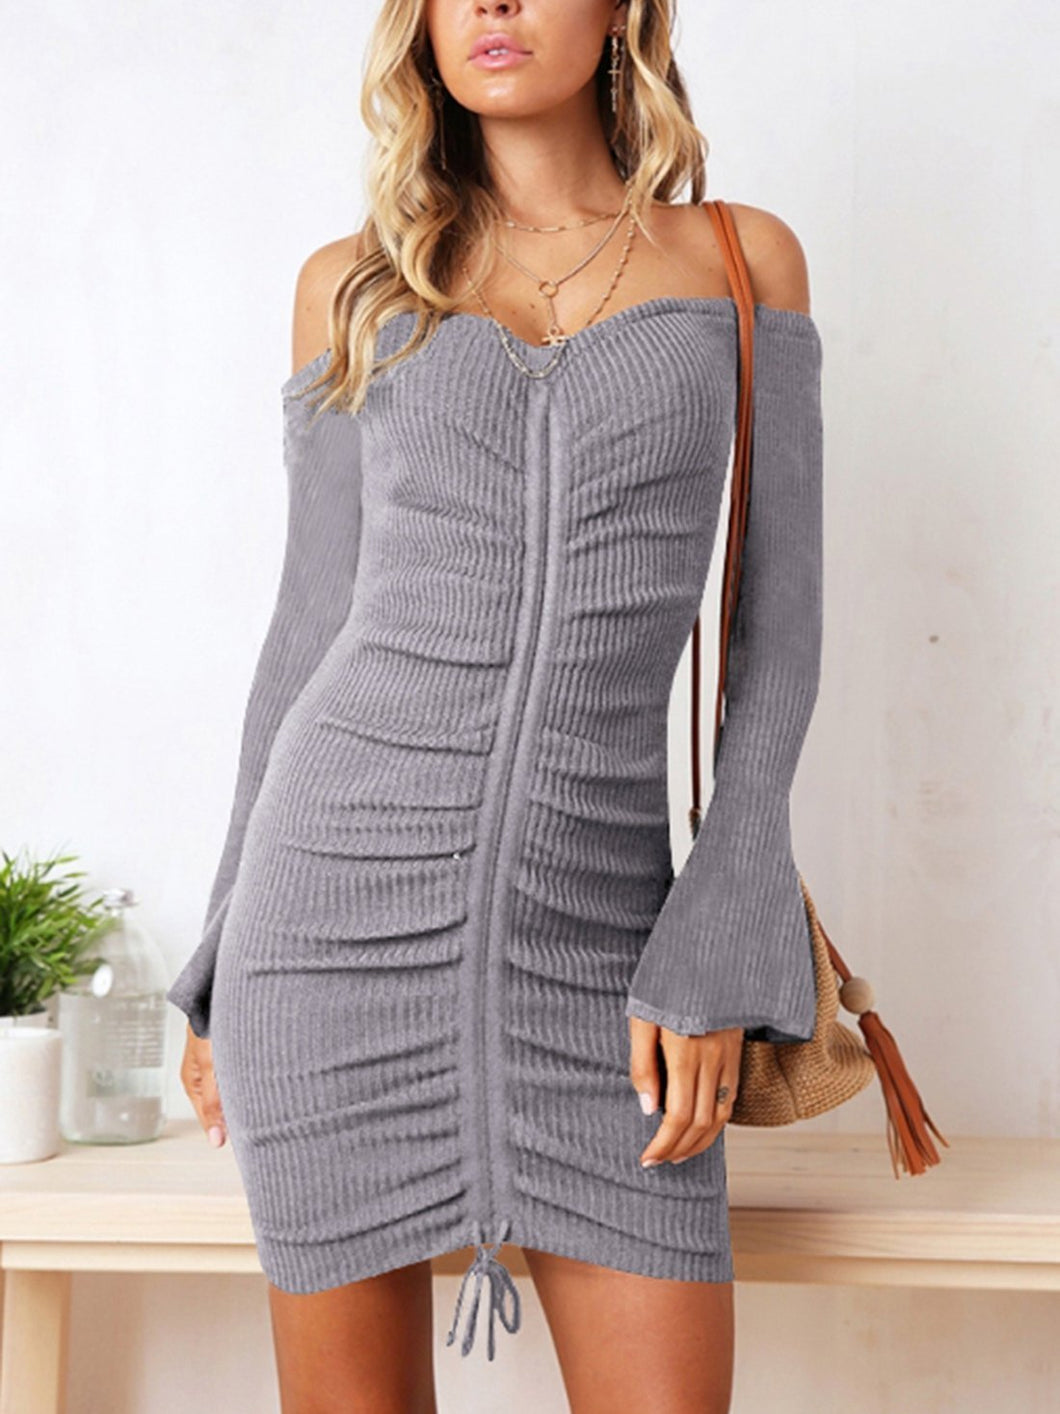 Knit Off Shoulder Long Sleeve Bodycon Mini Dress